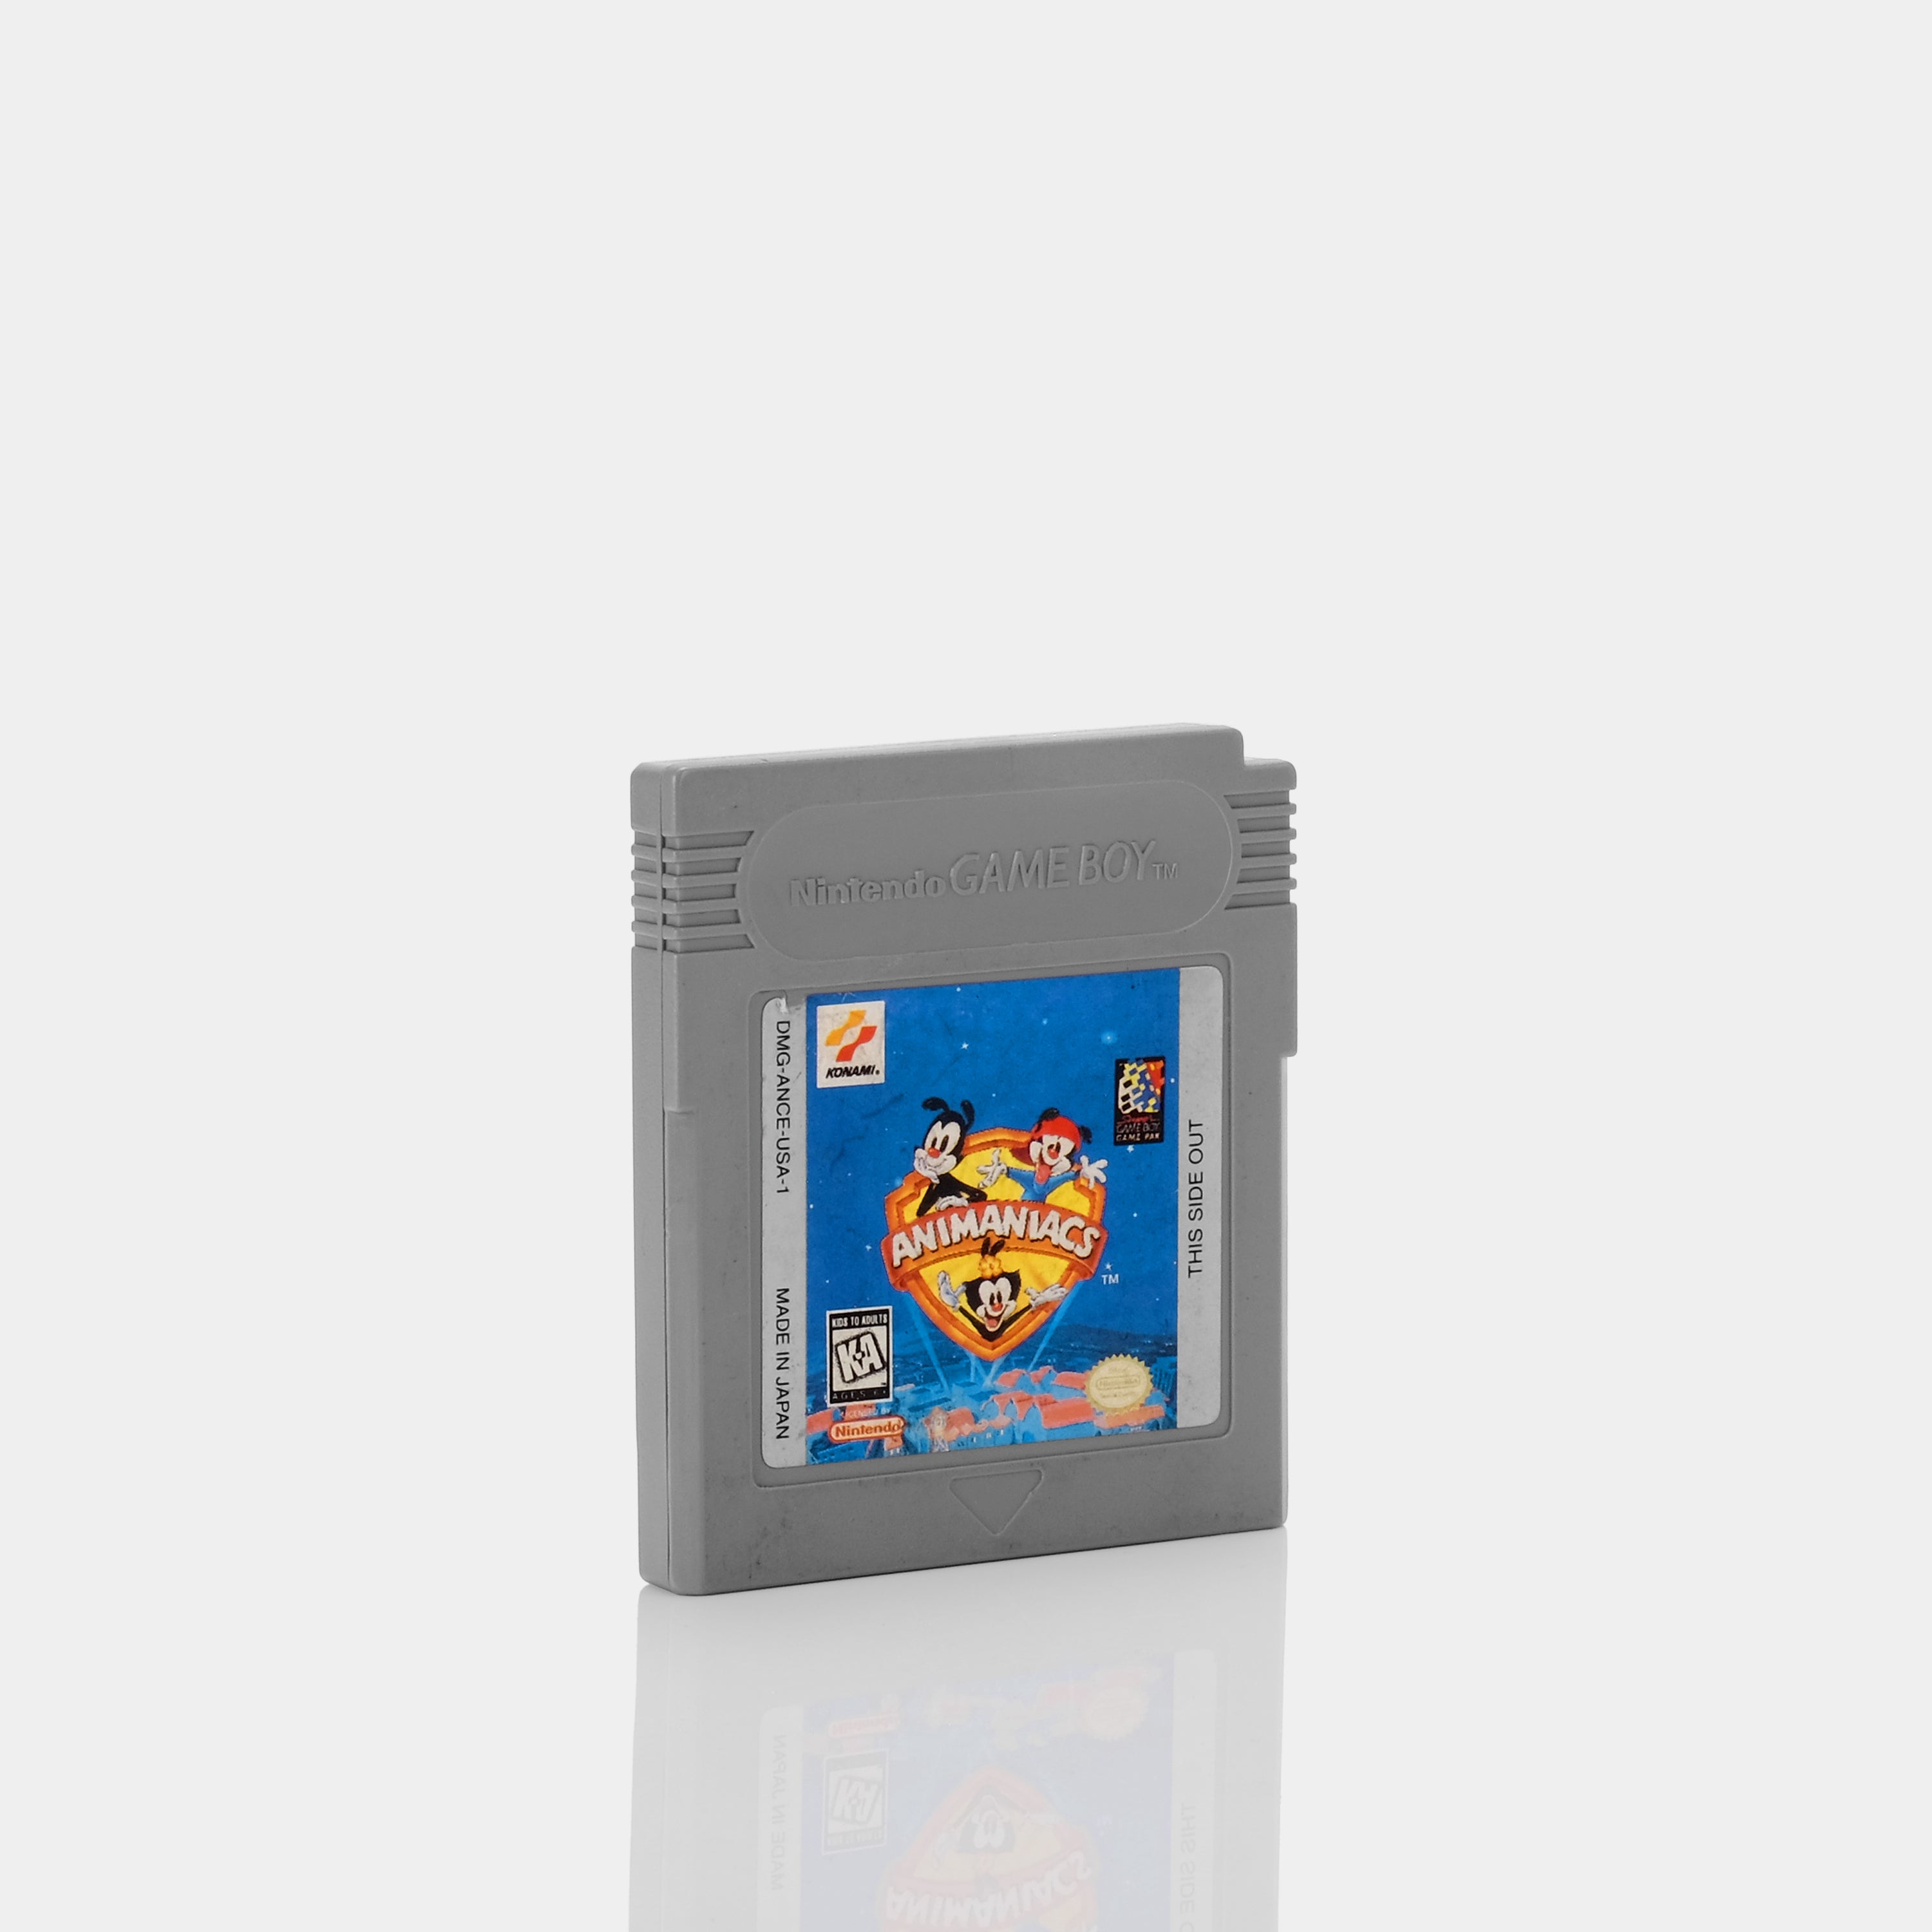 Animaniacs Game Boy Game